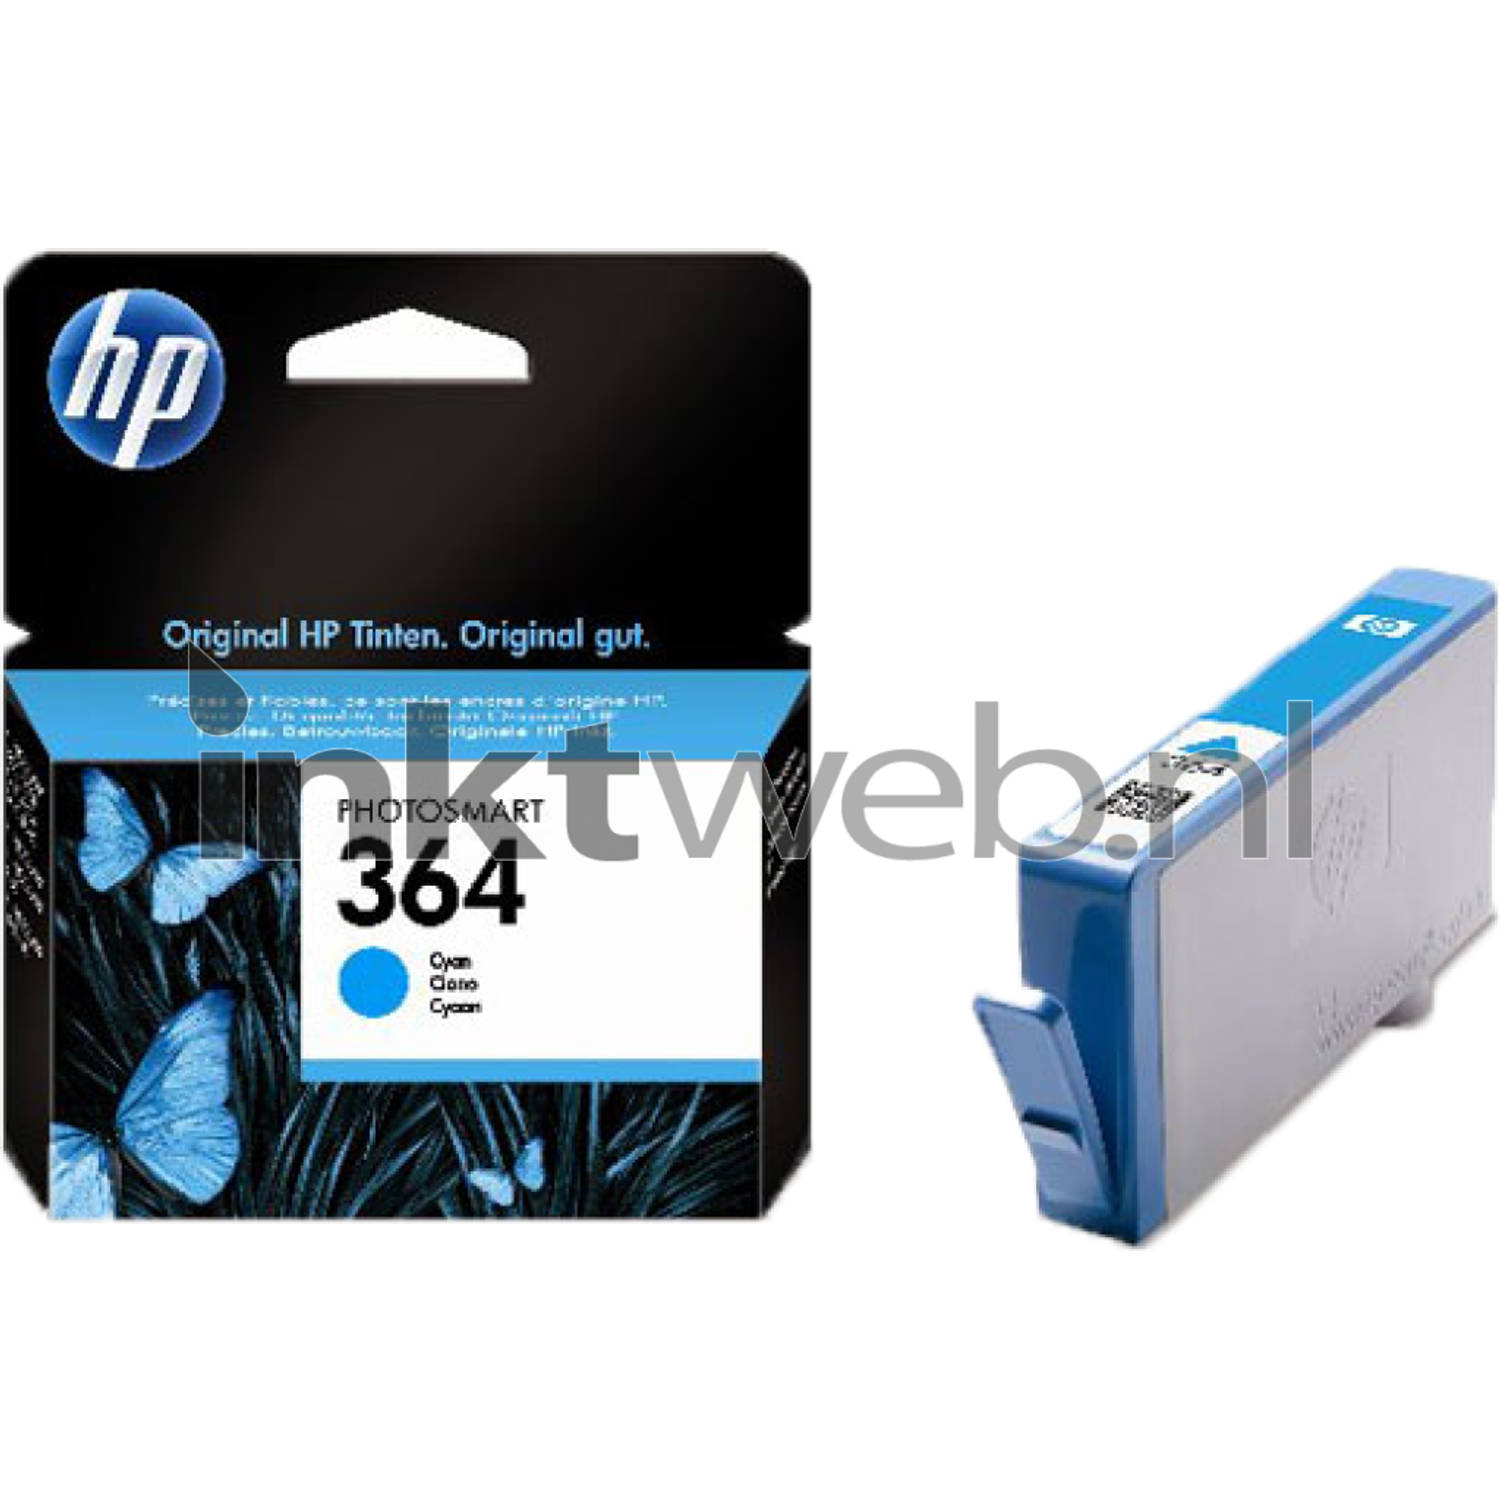 HP 364 cyaan cartridge